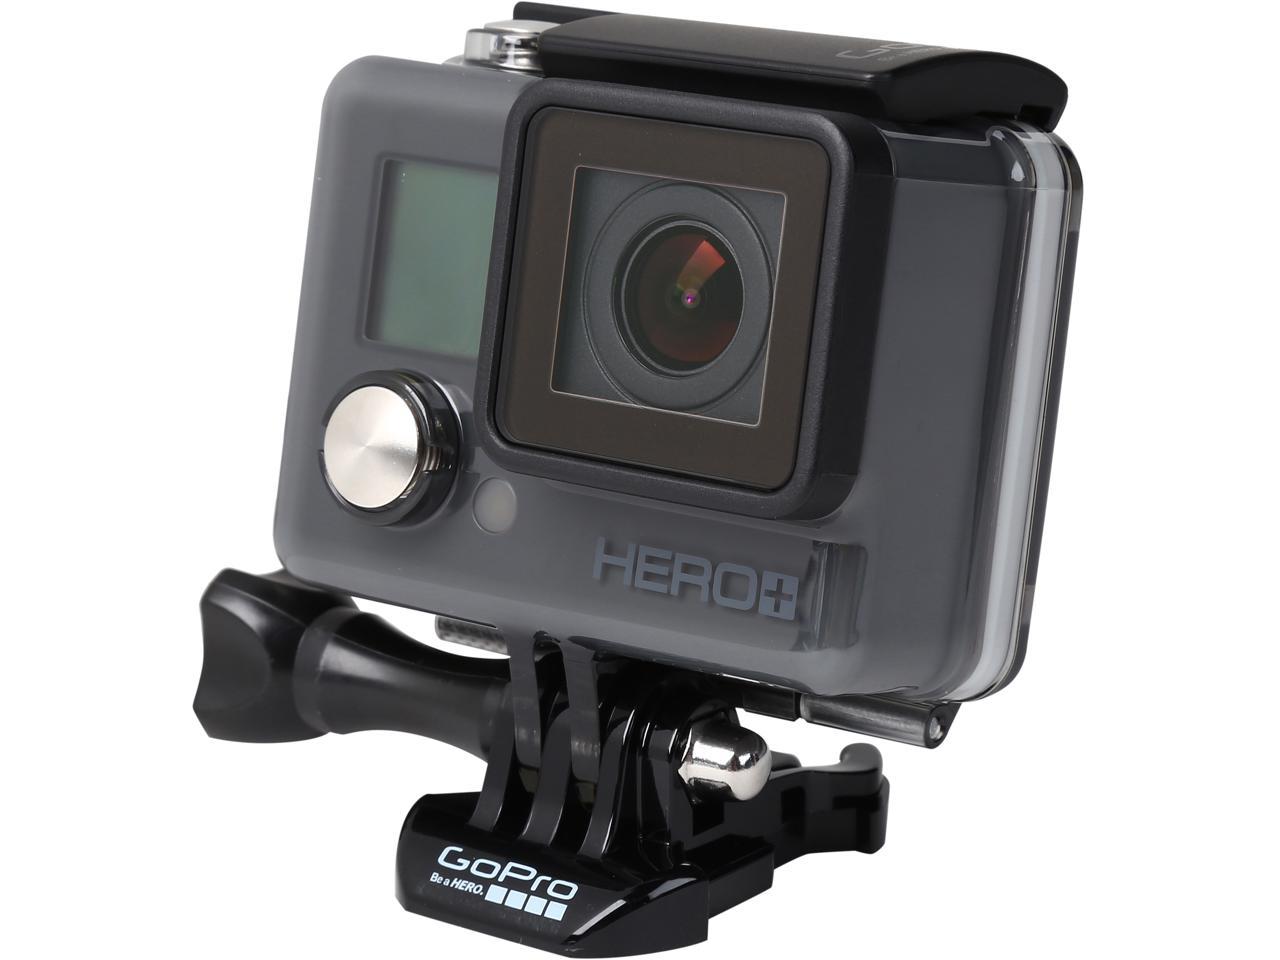 GoPro HERO+ LCD CHDHB-101 Black 8 MP Action Camera - Newegg.com